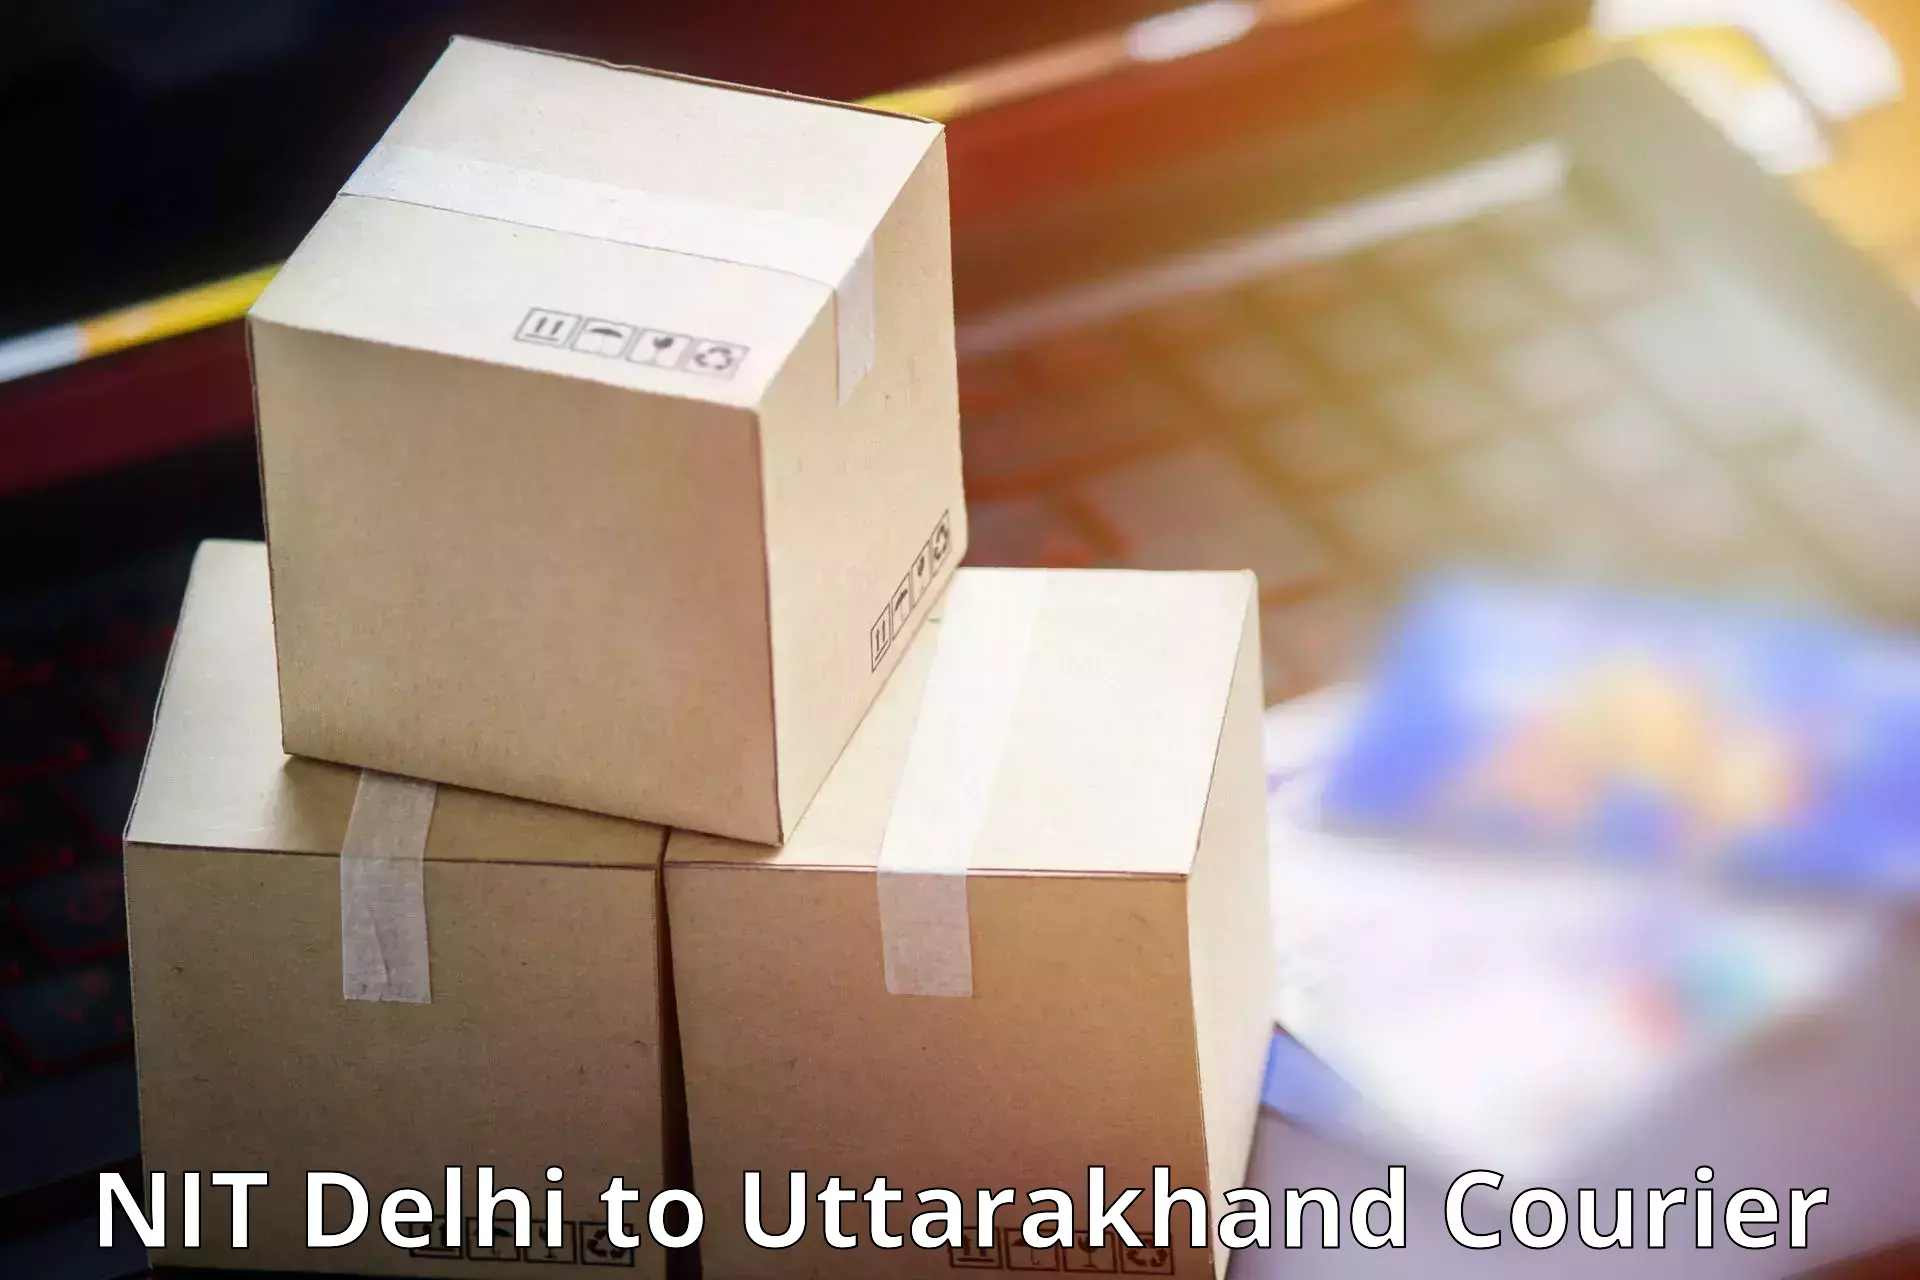 Express courier capabilities NIT Delhi to Dehradun